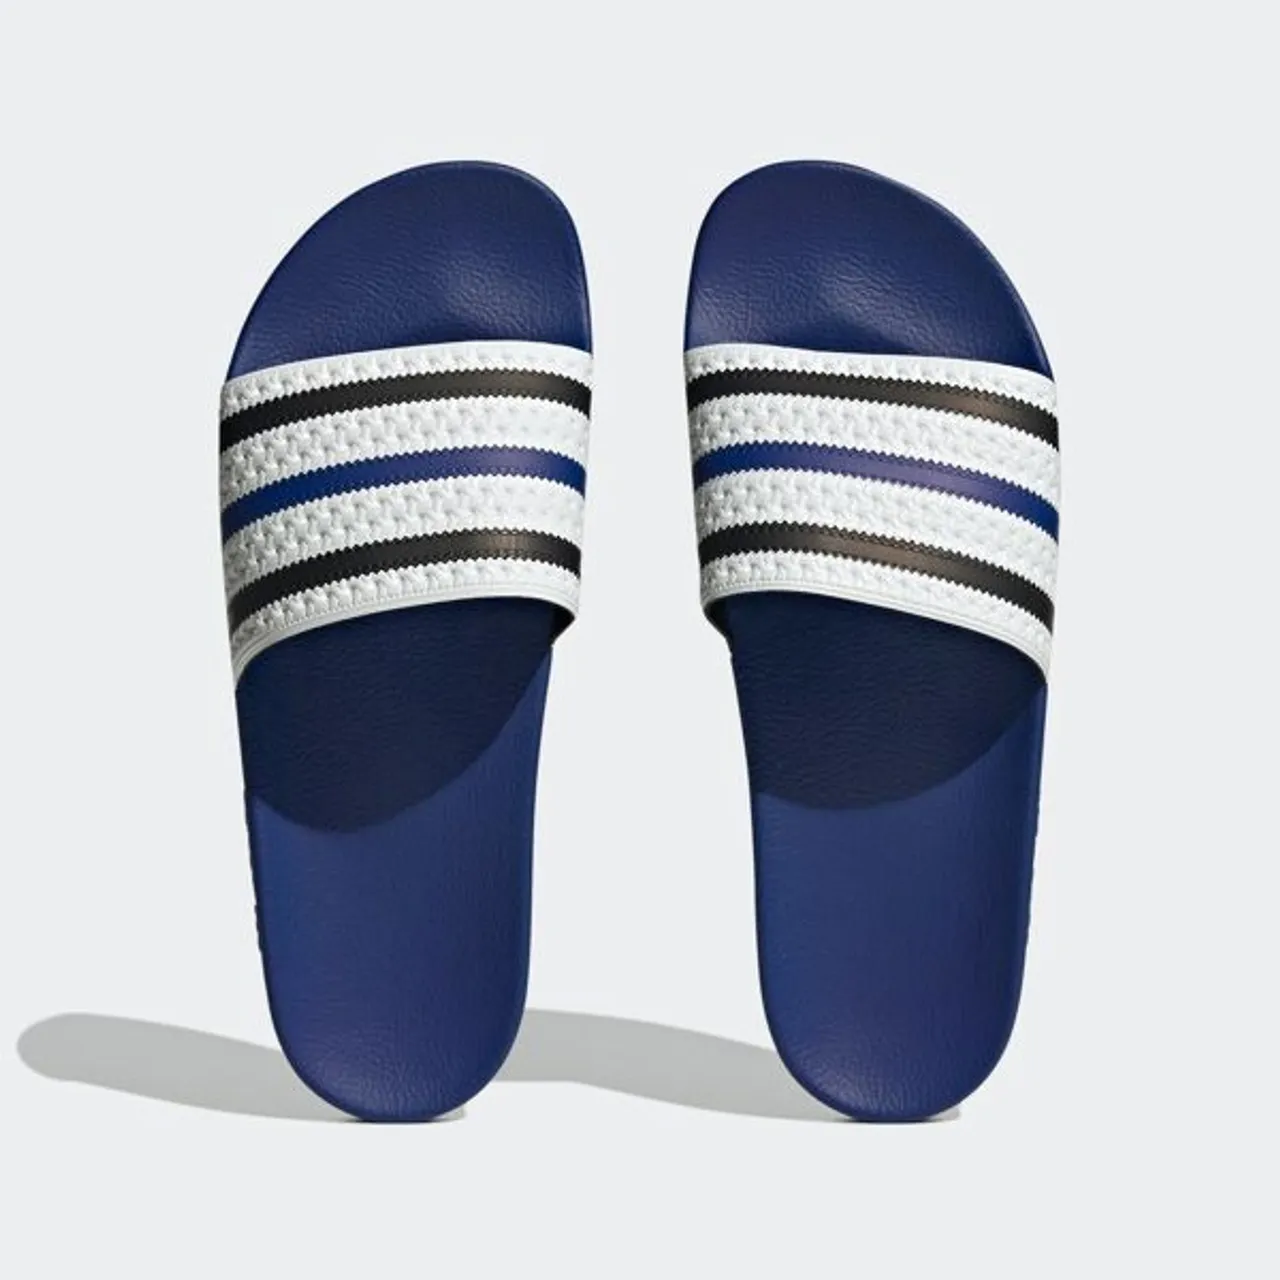 Badesandale ADIDAS ORIGINALS "ADILETTE" Gr. 47, blau (cloud white, core black, bright blue) Schuhe Badelatschen Pantolette Schlappen Bade-Schuhe